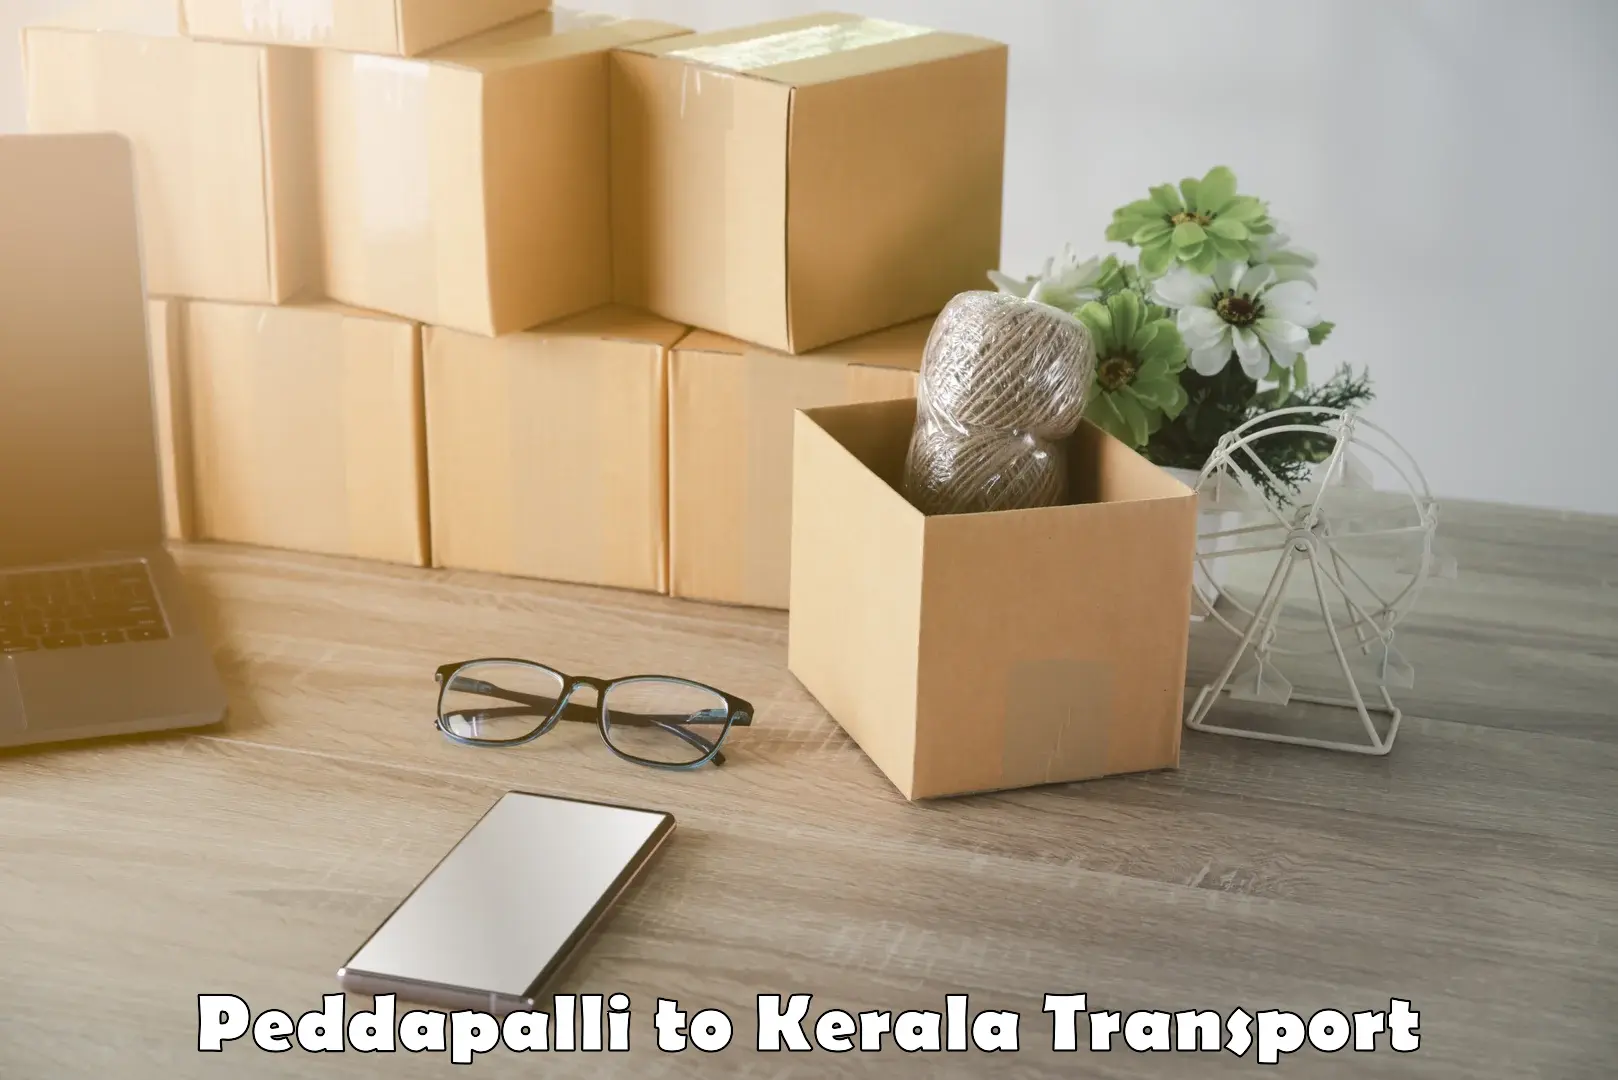 Transport in sharing Peddapalli to Kerala